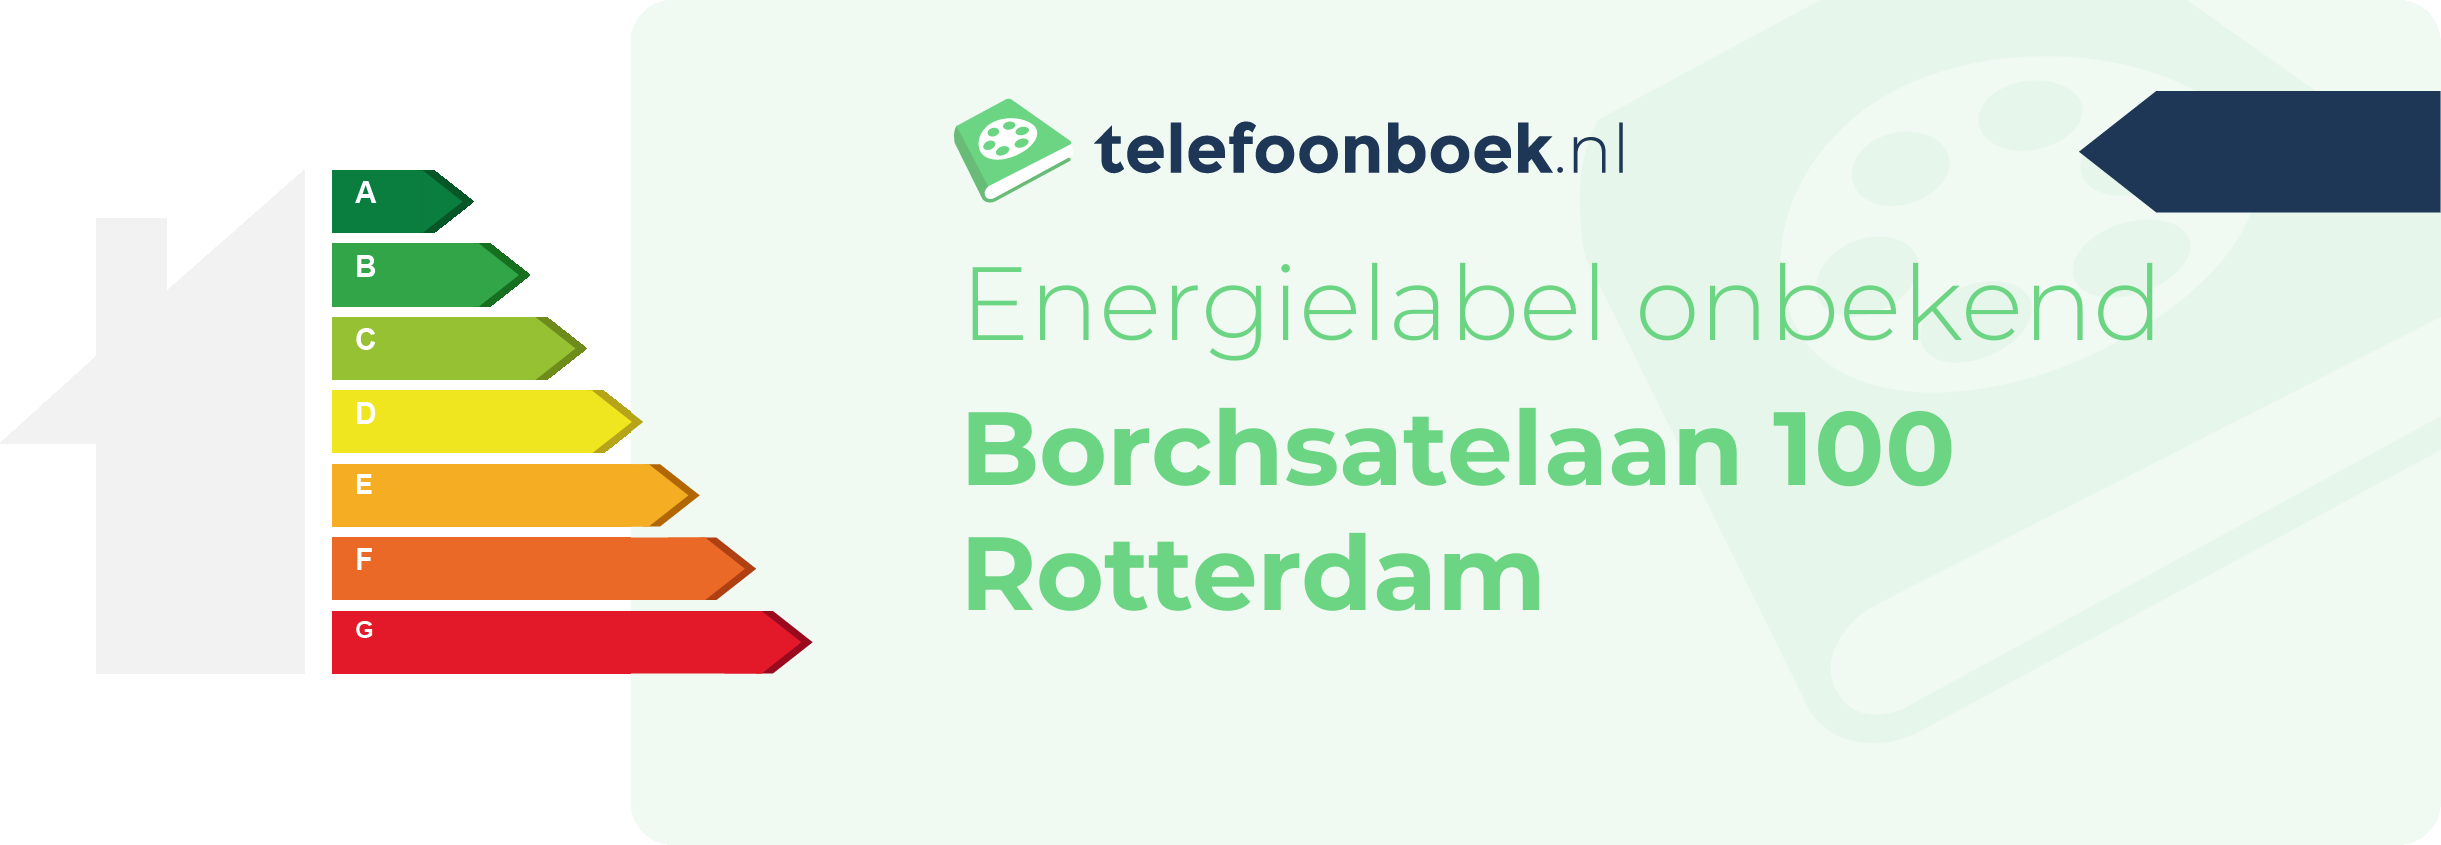 Energielabel Borchsatelaan 100 Rotterdam